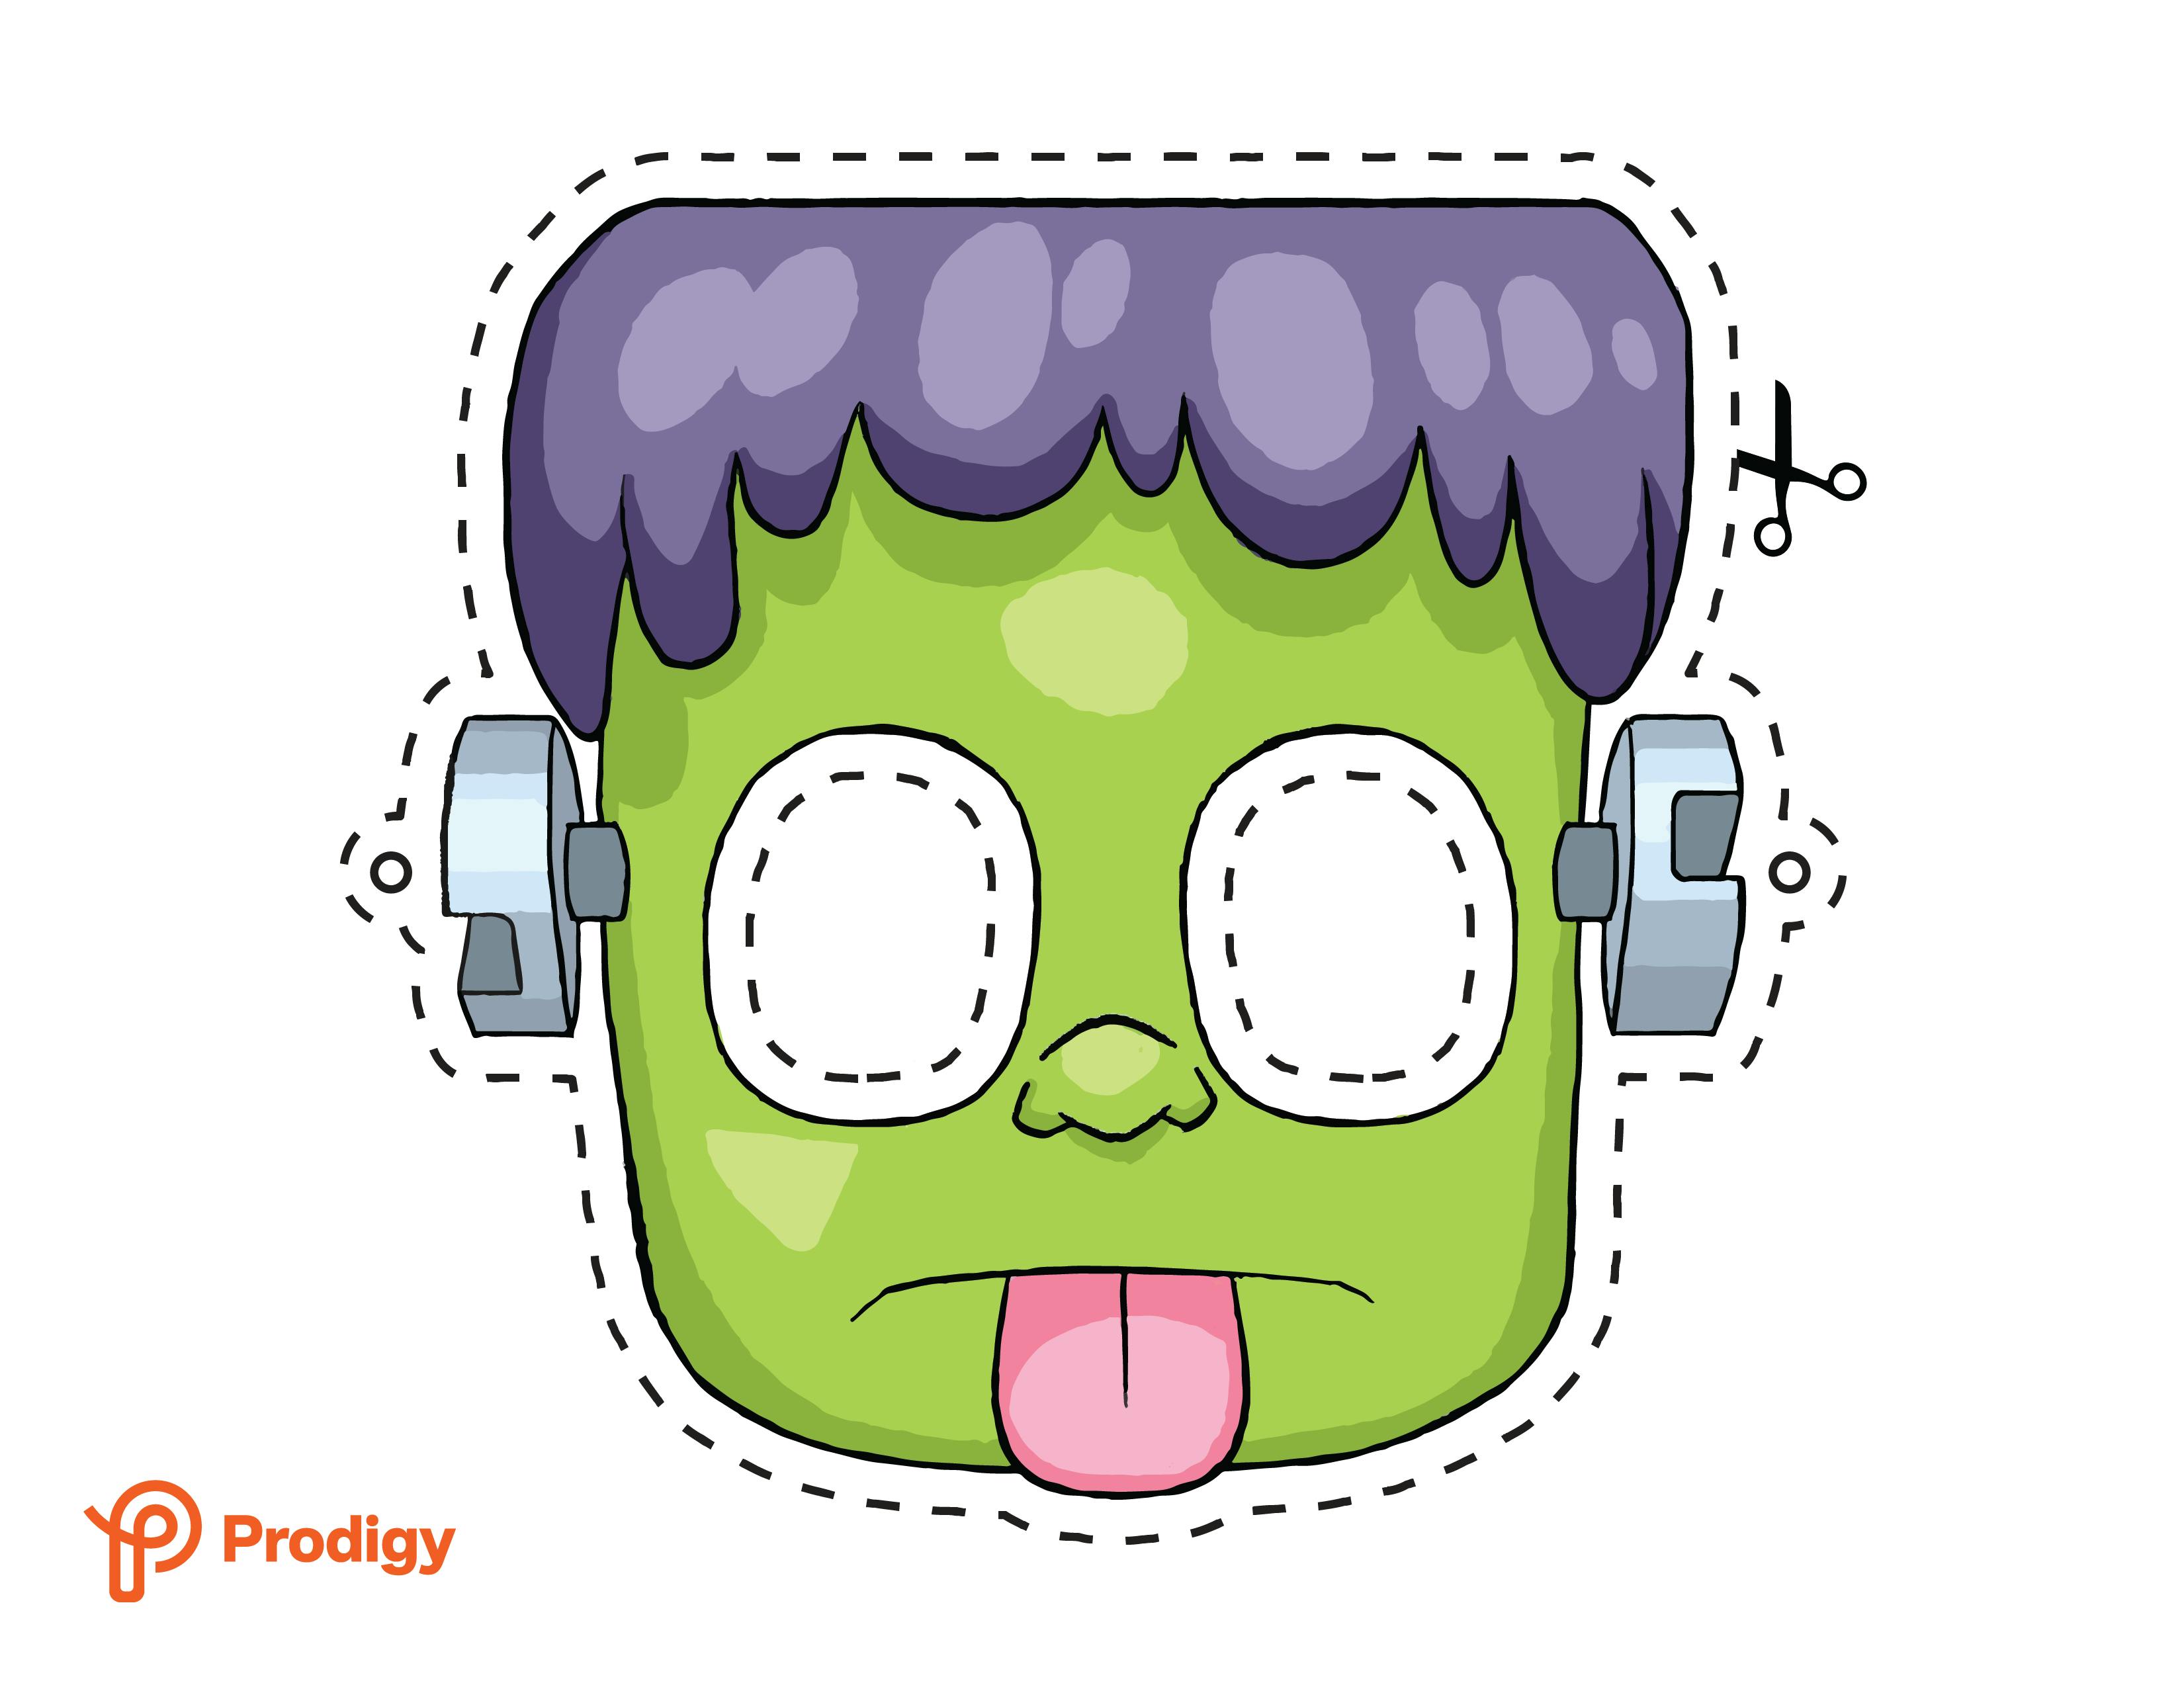 Printable Prodigy Frankenstein monster mask, in color